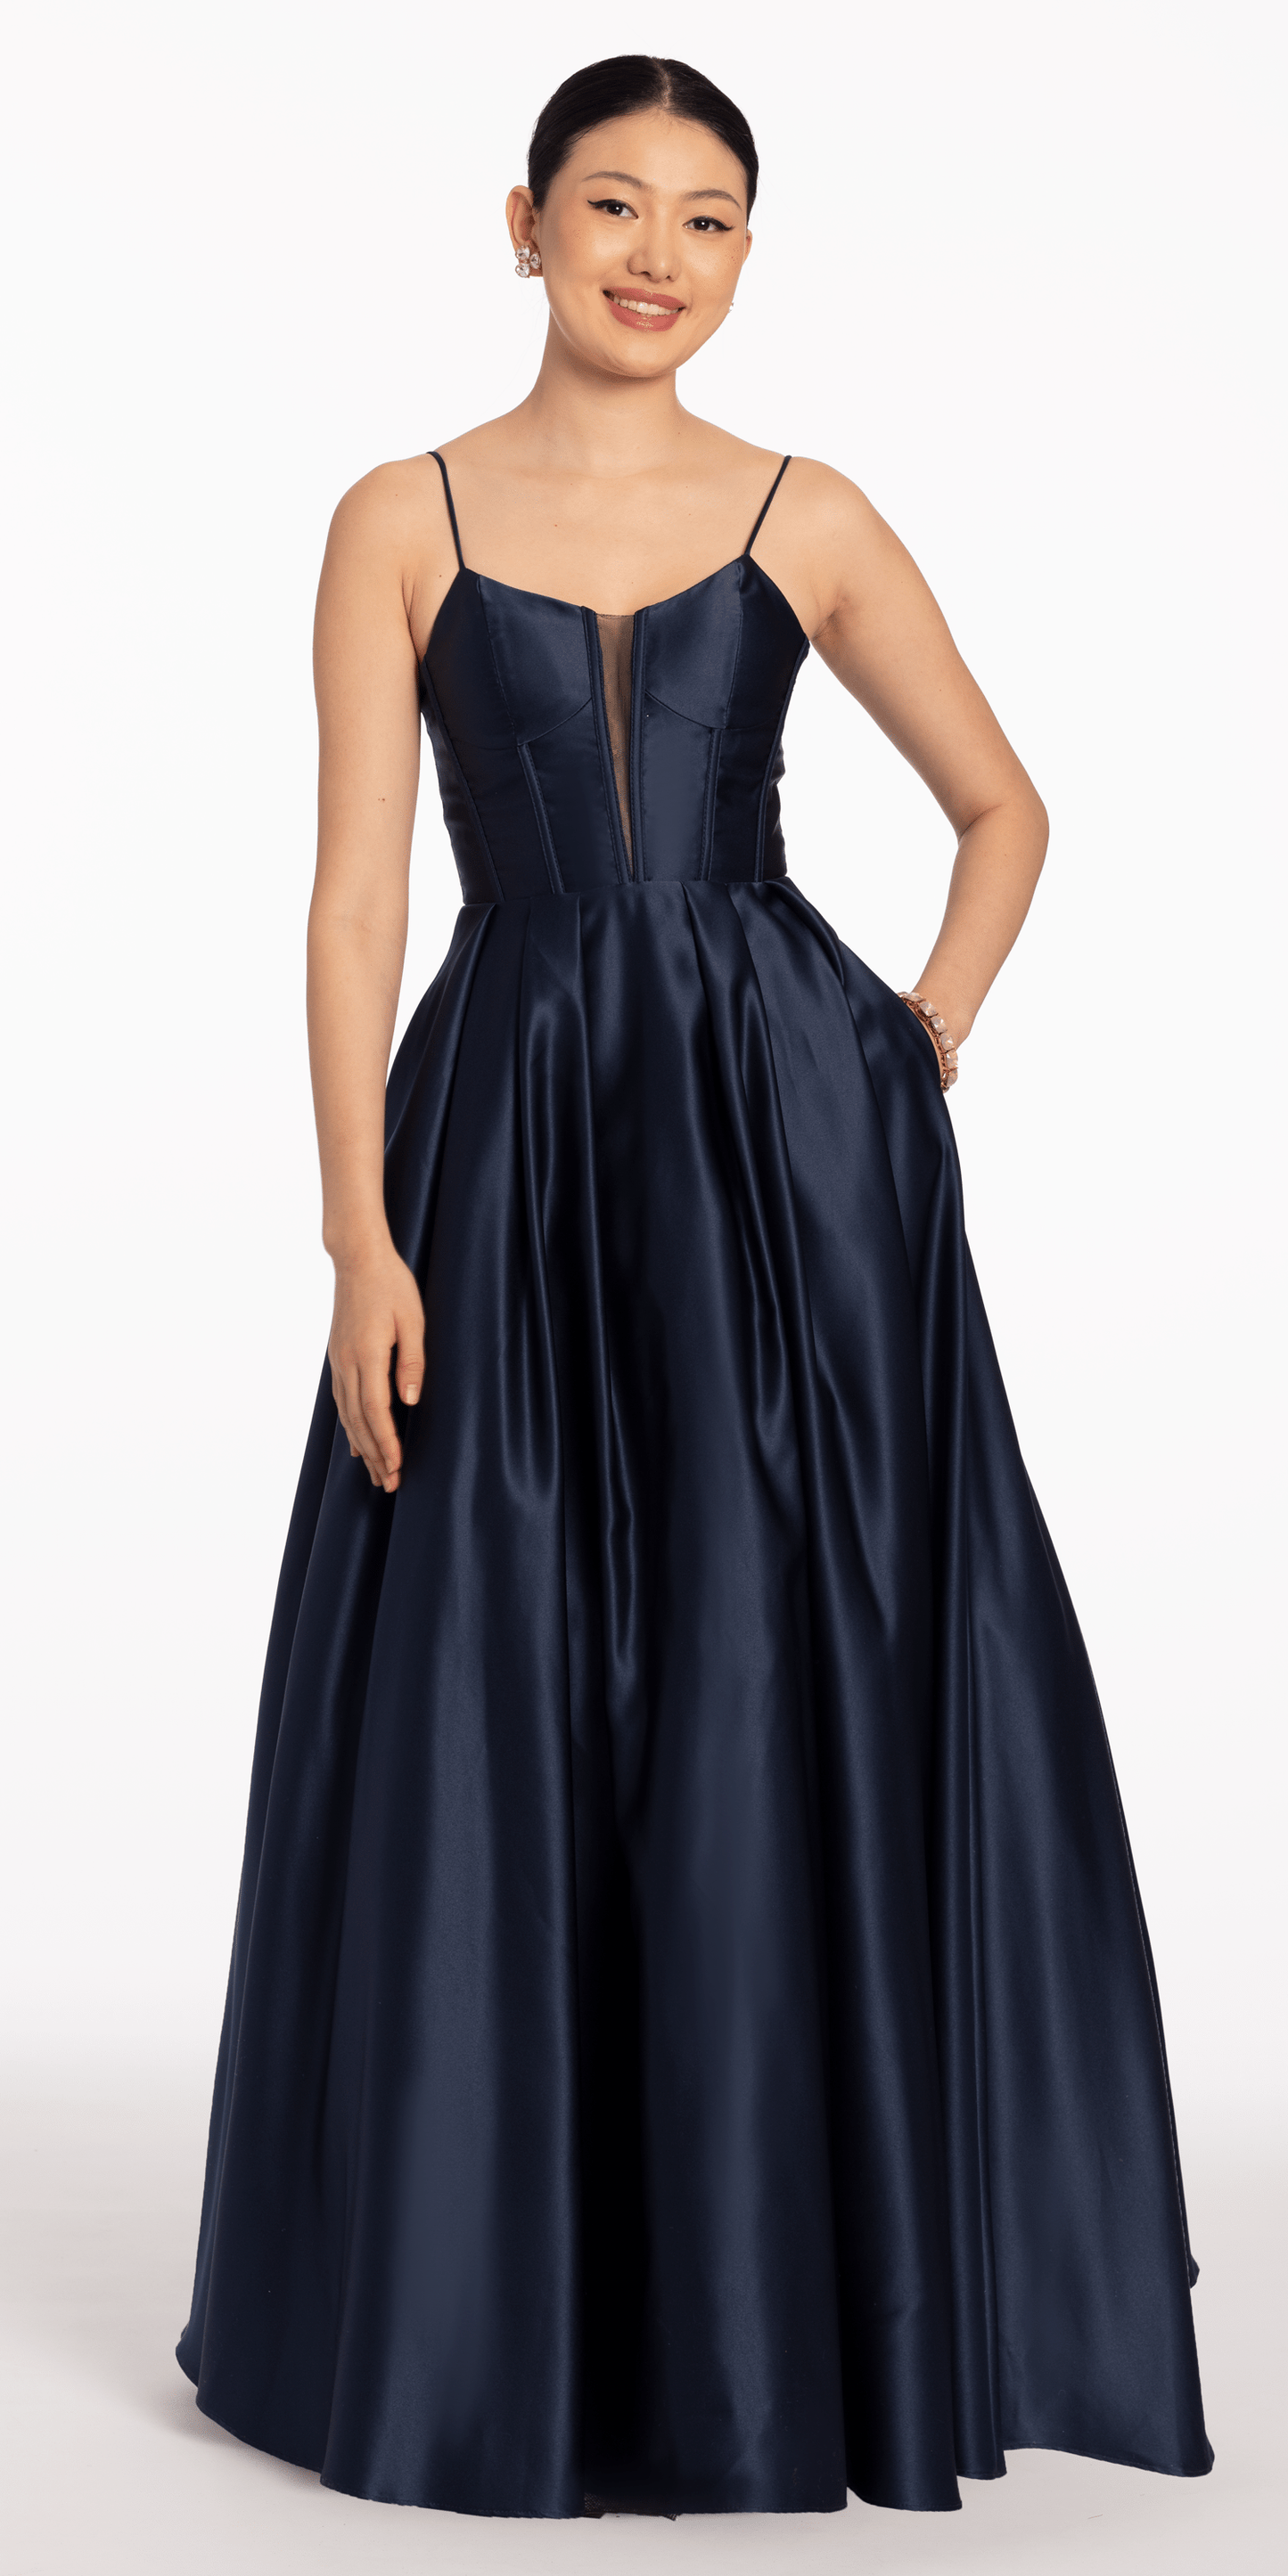 Rhinestone Corset Dress – Cavi Keon Collection